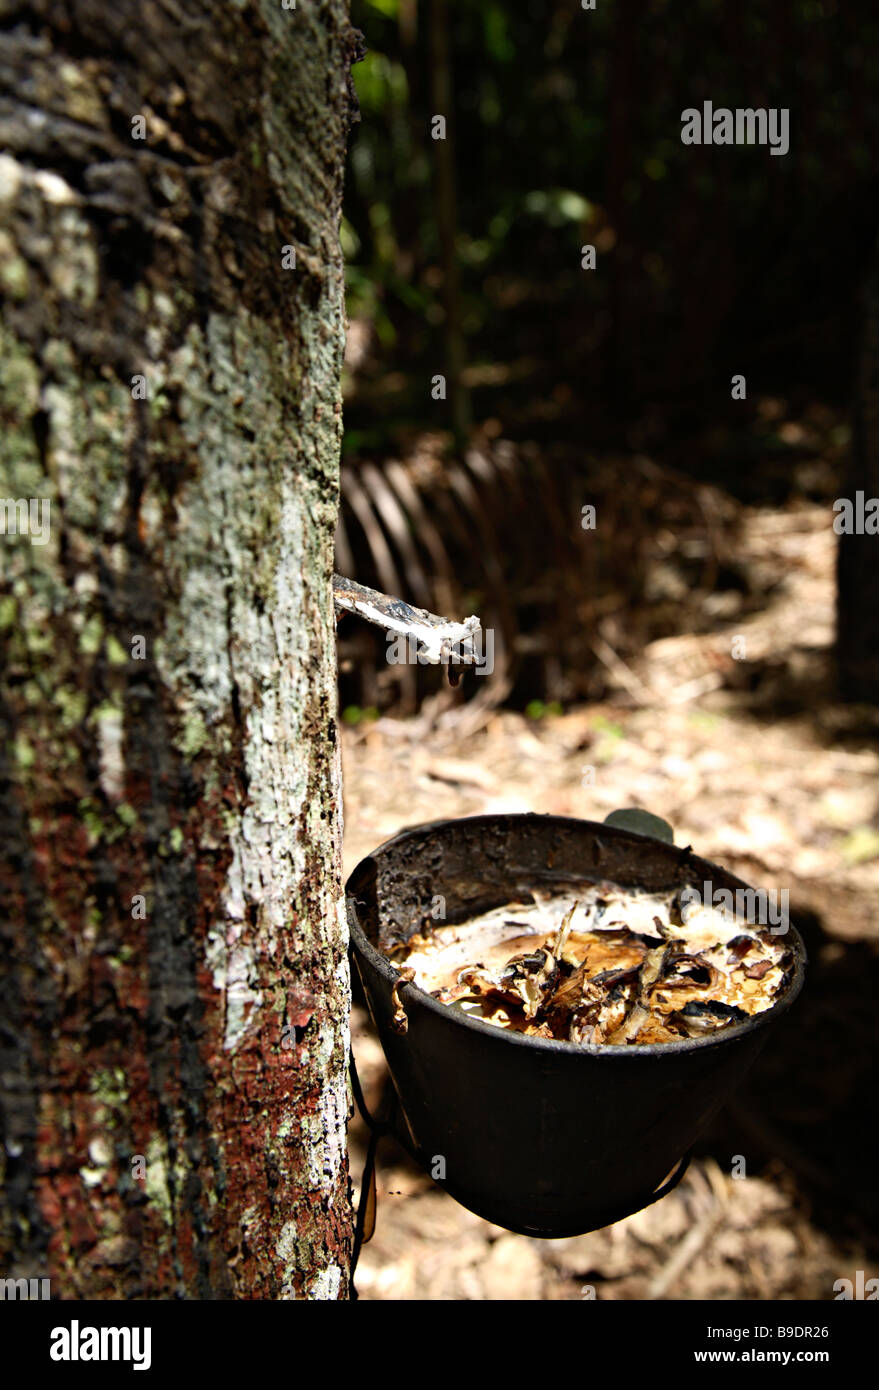 Latex collected from rubber tree Ecoparque de Una Brazil South America Stock Photo